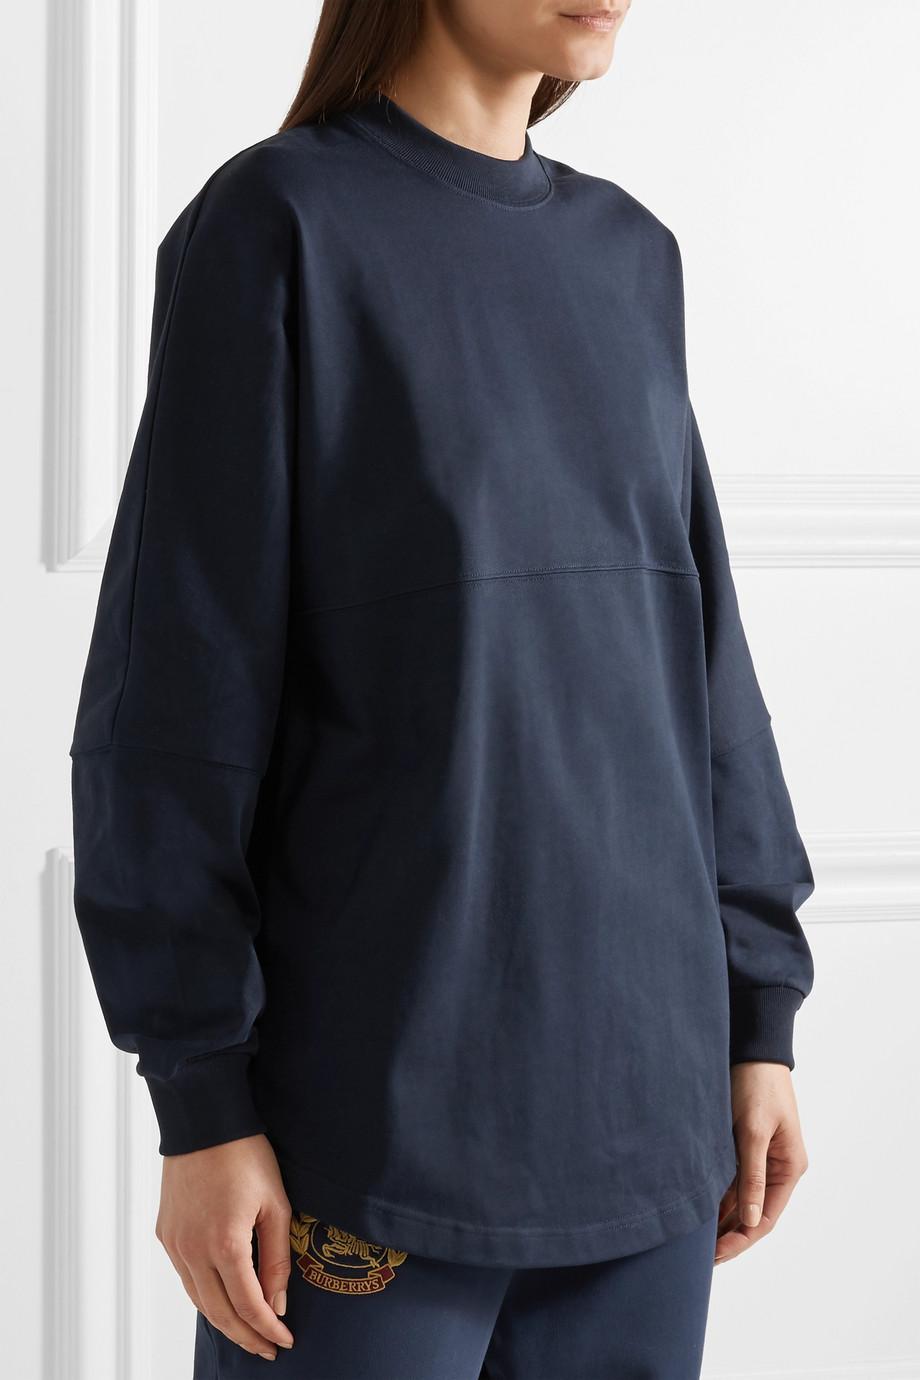 Burberry Oversized Printed Cotton-jersey Sweatshirt in Navy (Blue 